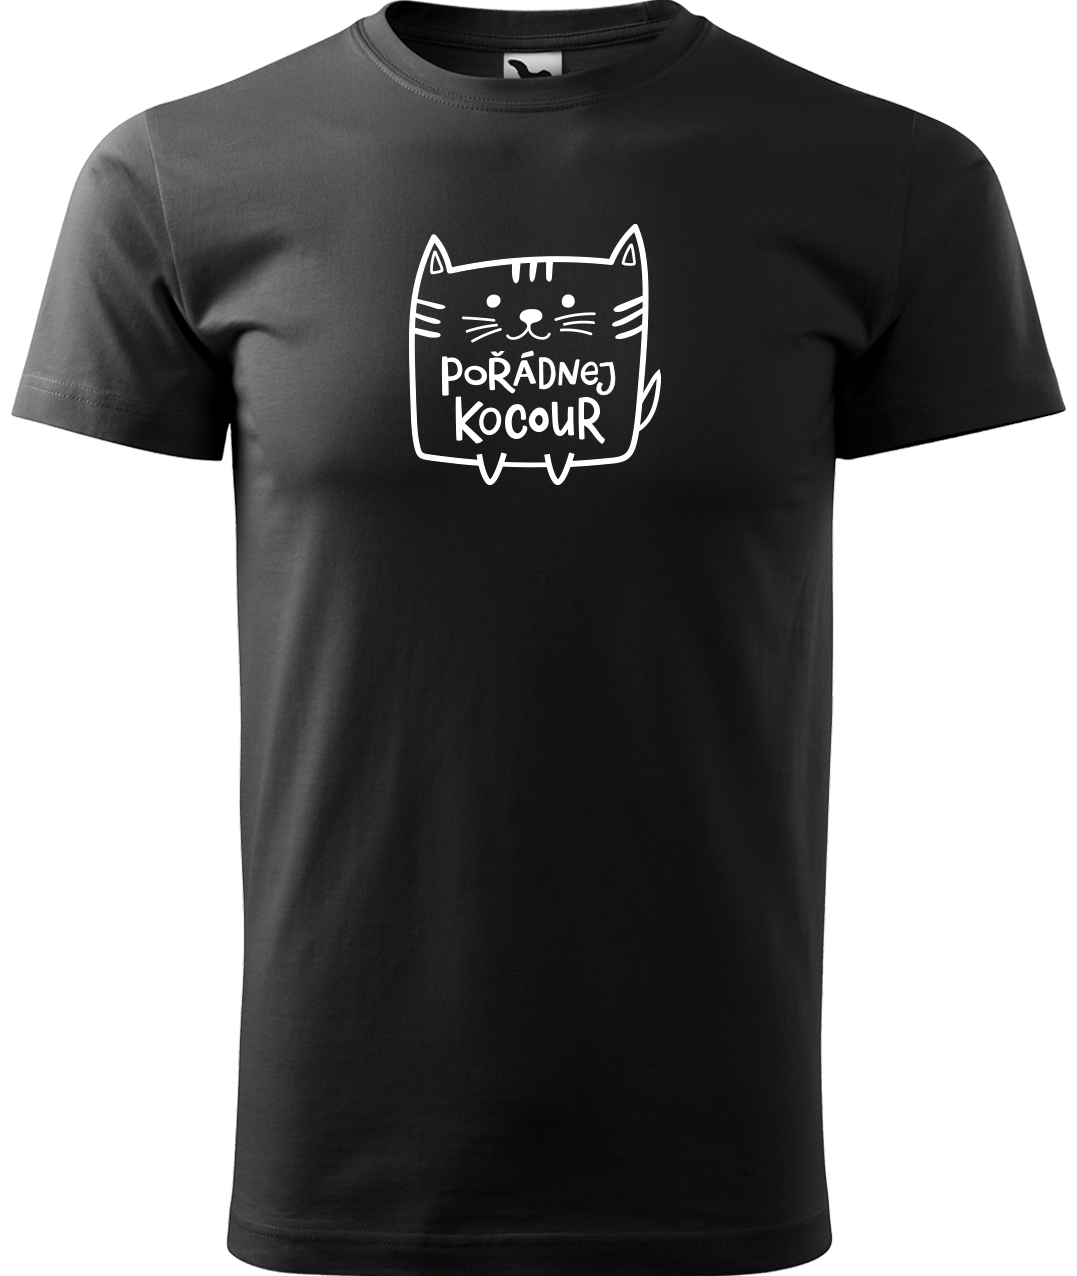 Pánské tričko s kočkou - Pořádnej kocour Velikost: XL, Barva: Černá (01)